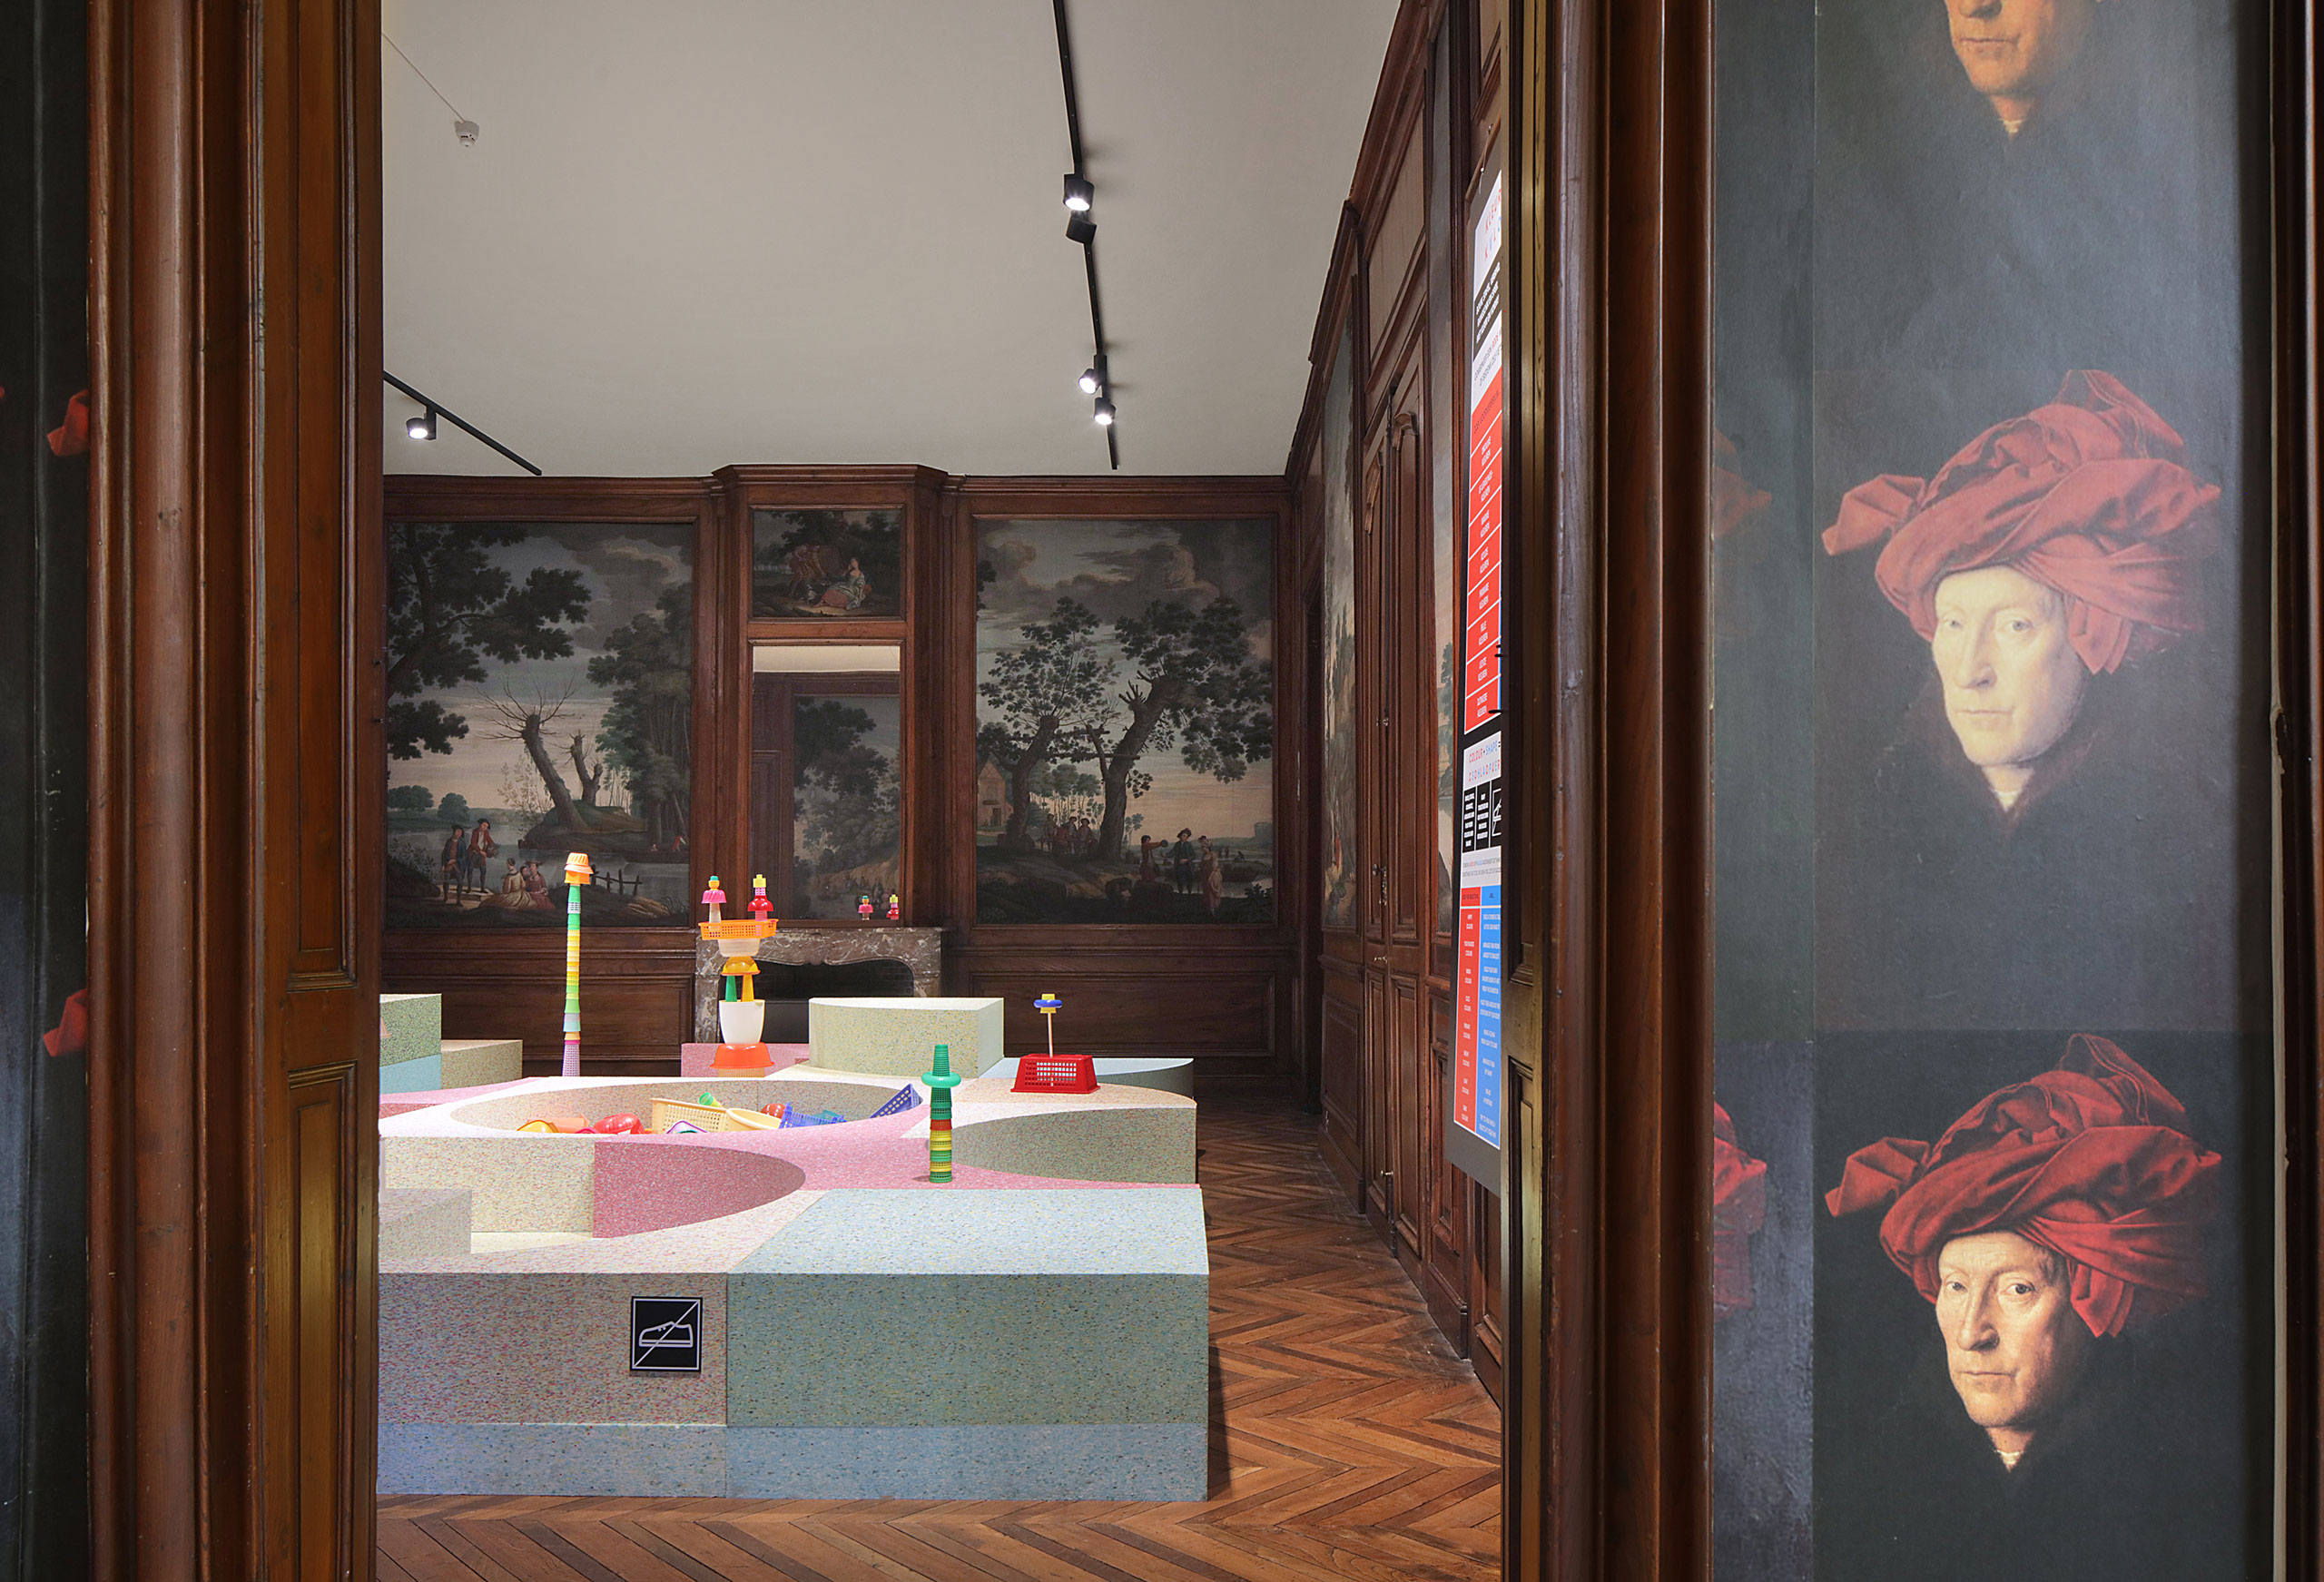 Exhibition view. "Kleureyck. Van Eyck’s Colours in Design" at Design Museum Ghent.
Featured (foregound): Studio RENS, Changing Perception / ONLINE, 2020.
Featured (interior of room): Joanna Reuse, C S D H L A O P U E R , 2020.
Photo by Filip Dujardin.